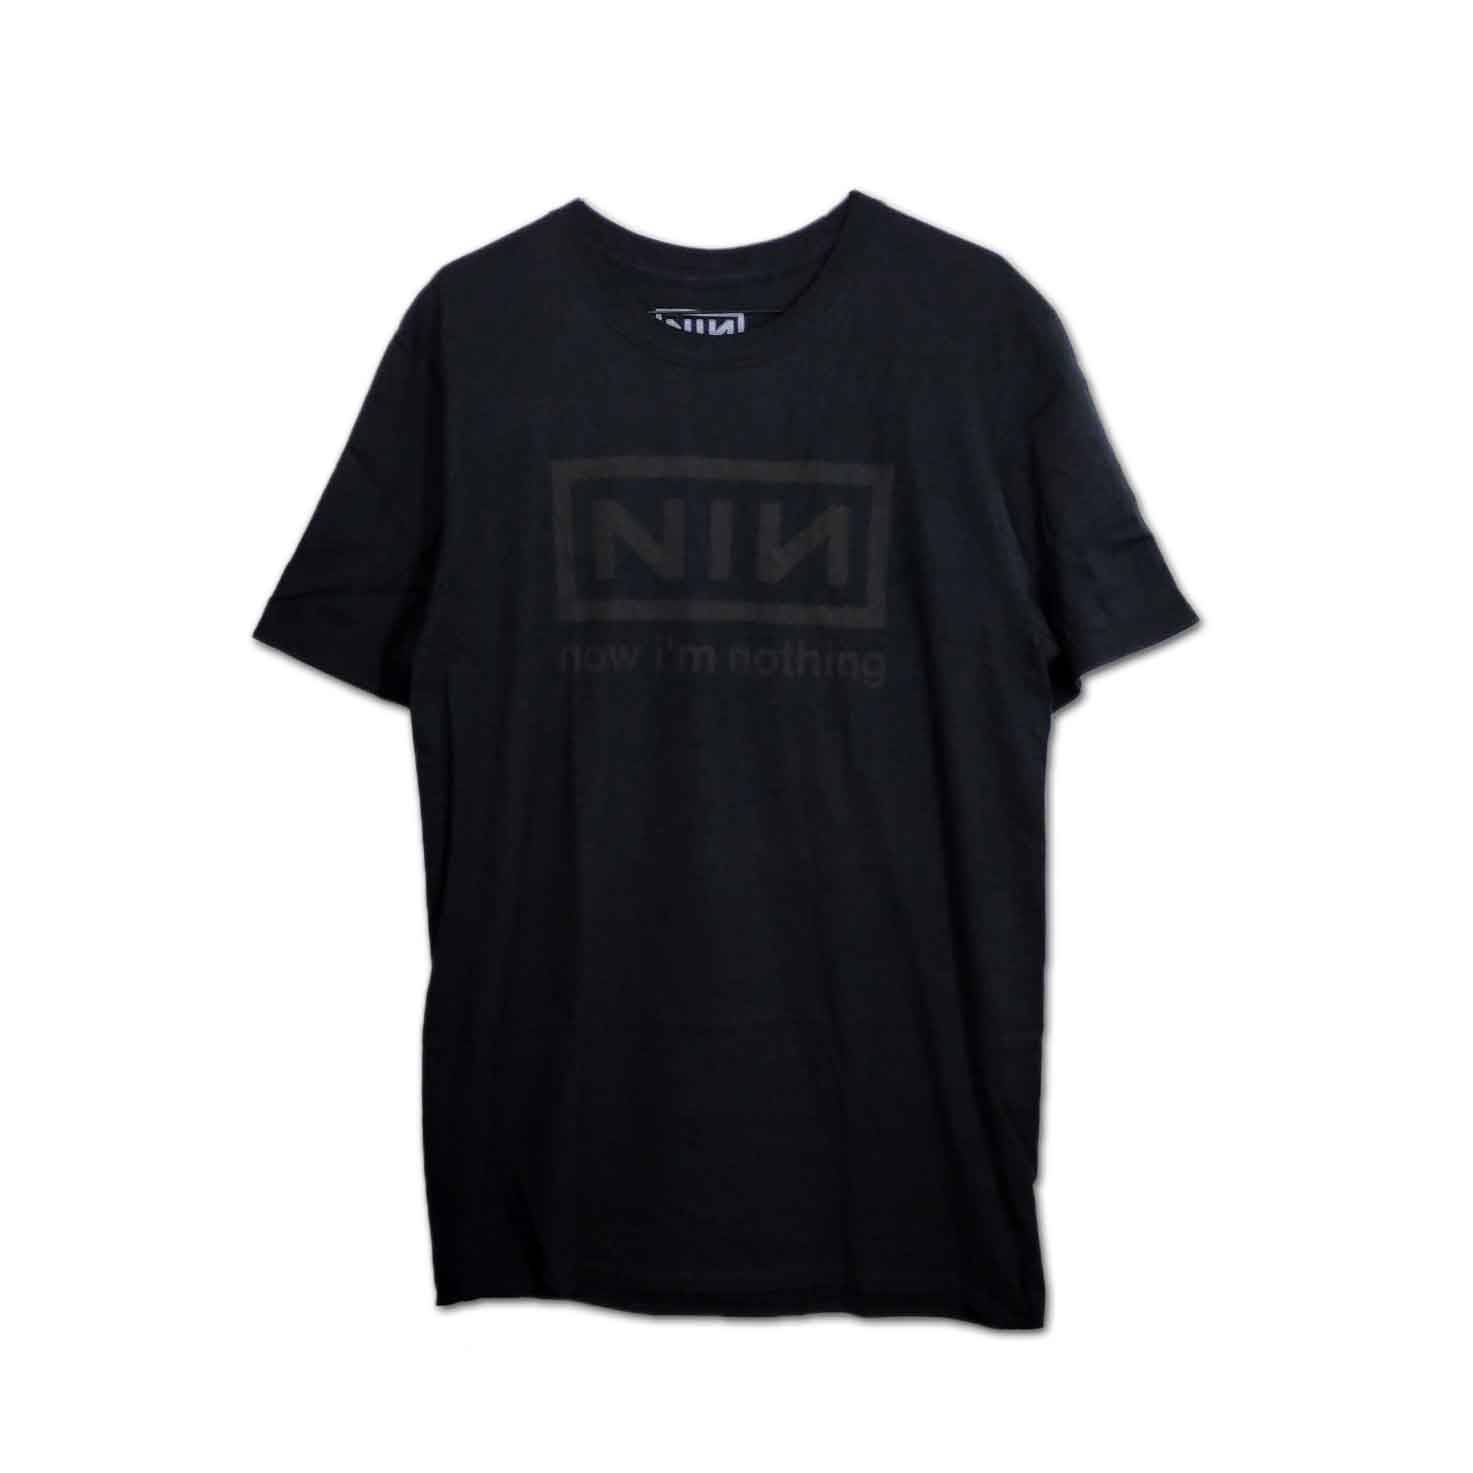 Nine Inch Nails ナインインチネイルズ バンド tシャツ 新品 L